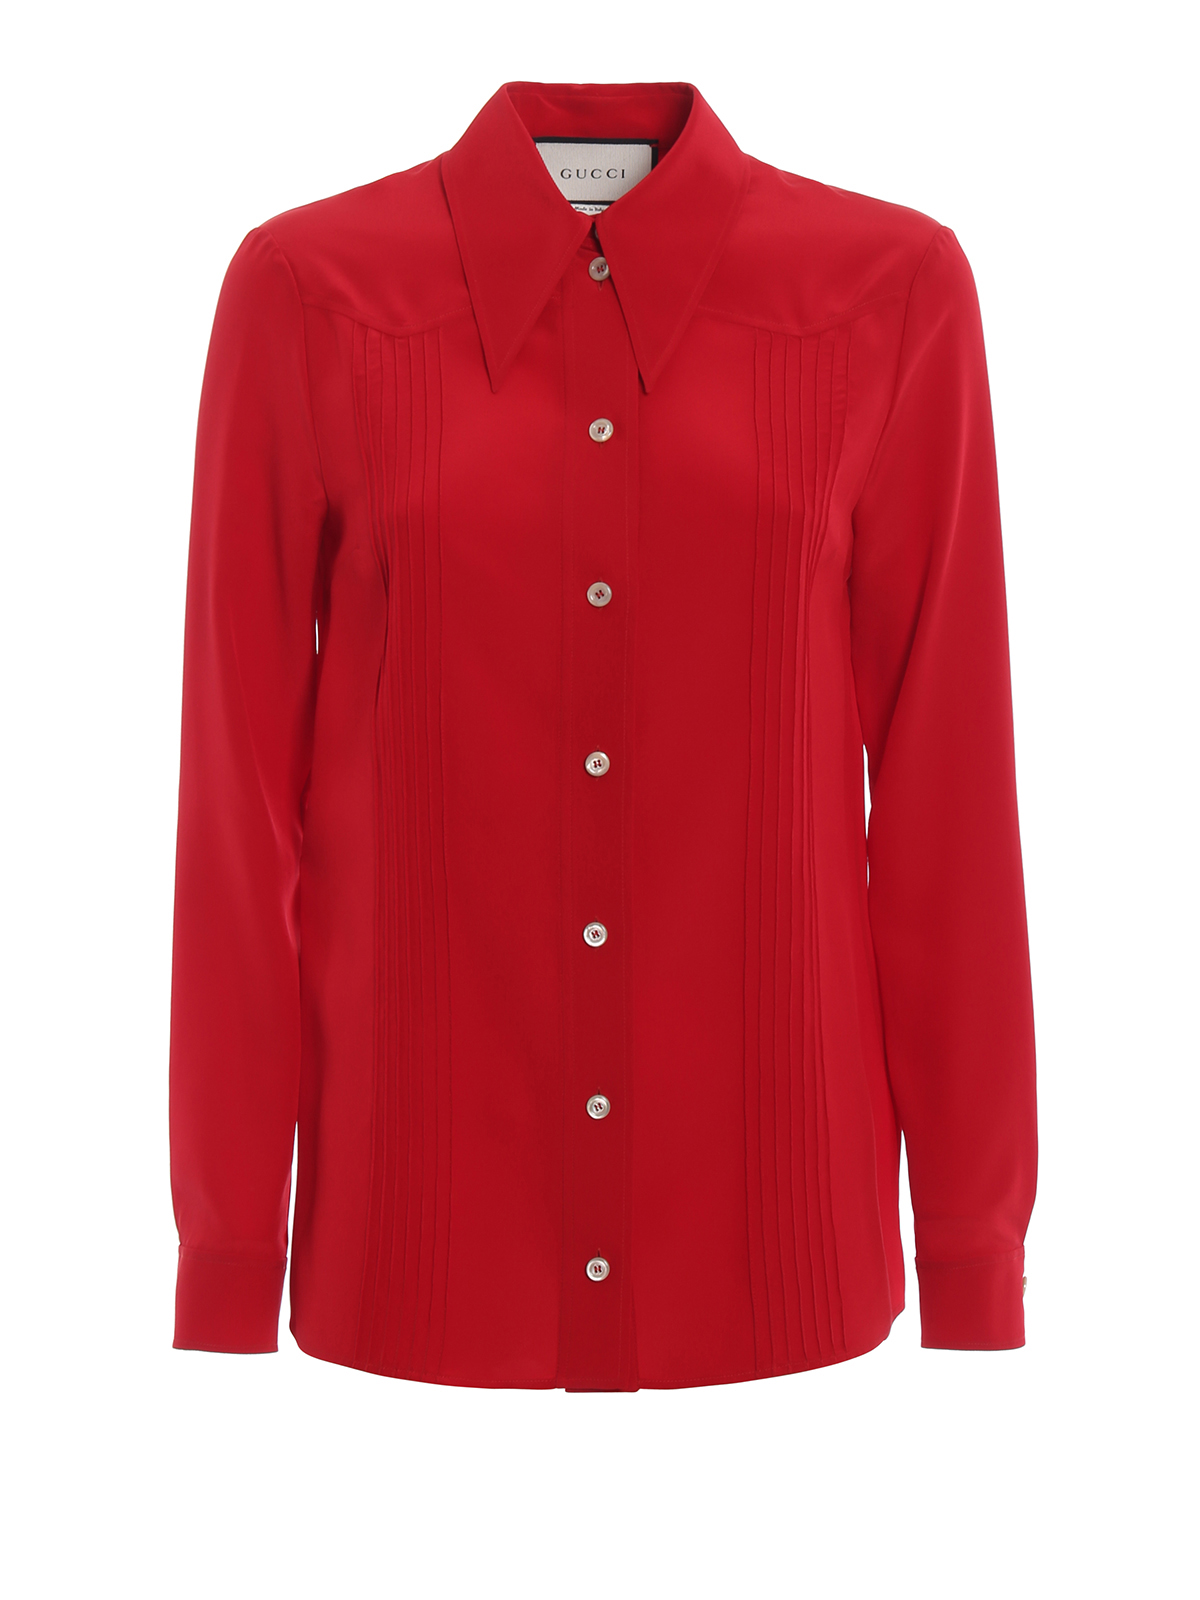 gucci red silk shirt